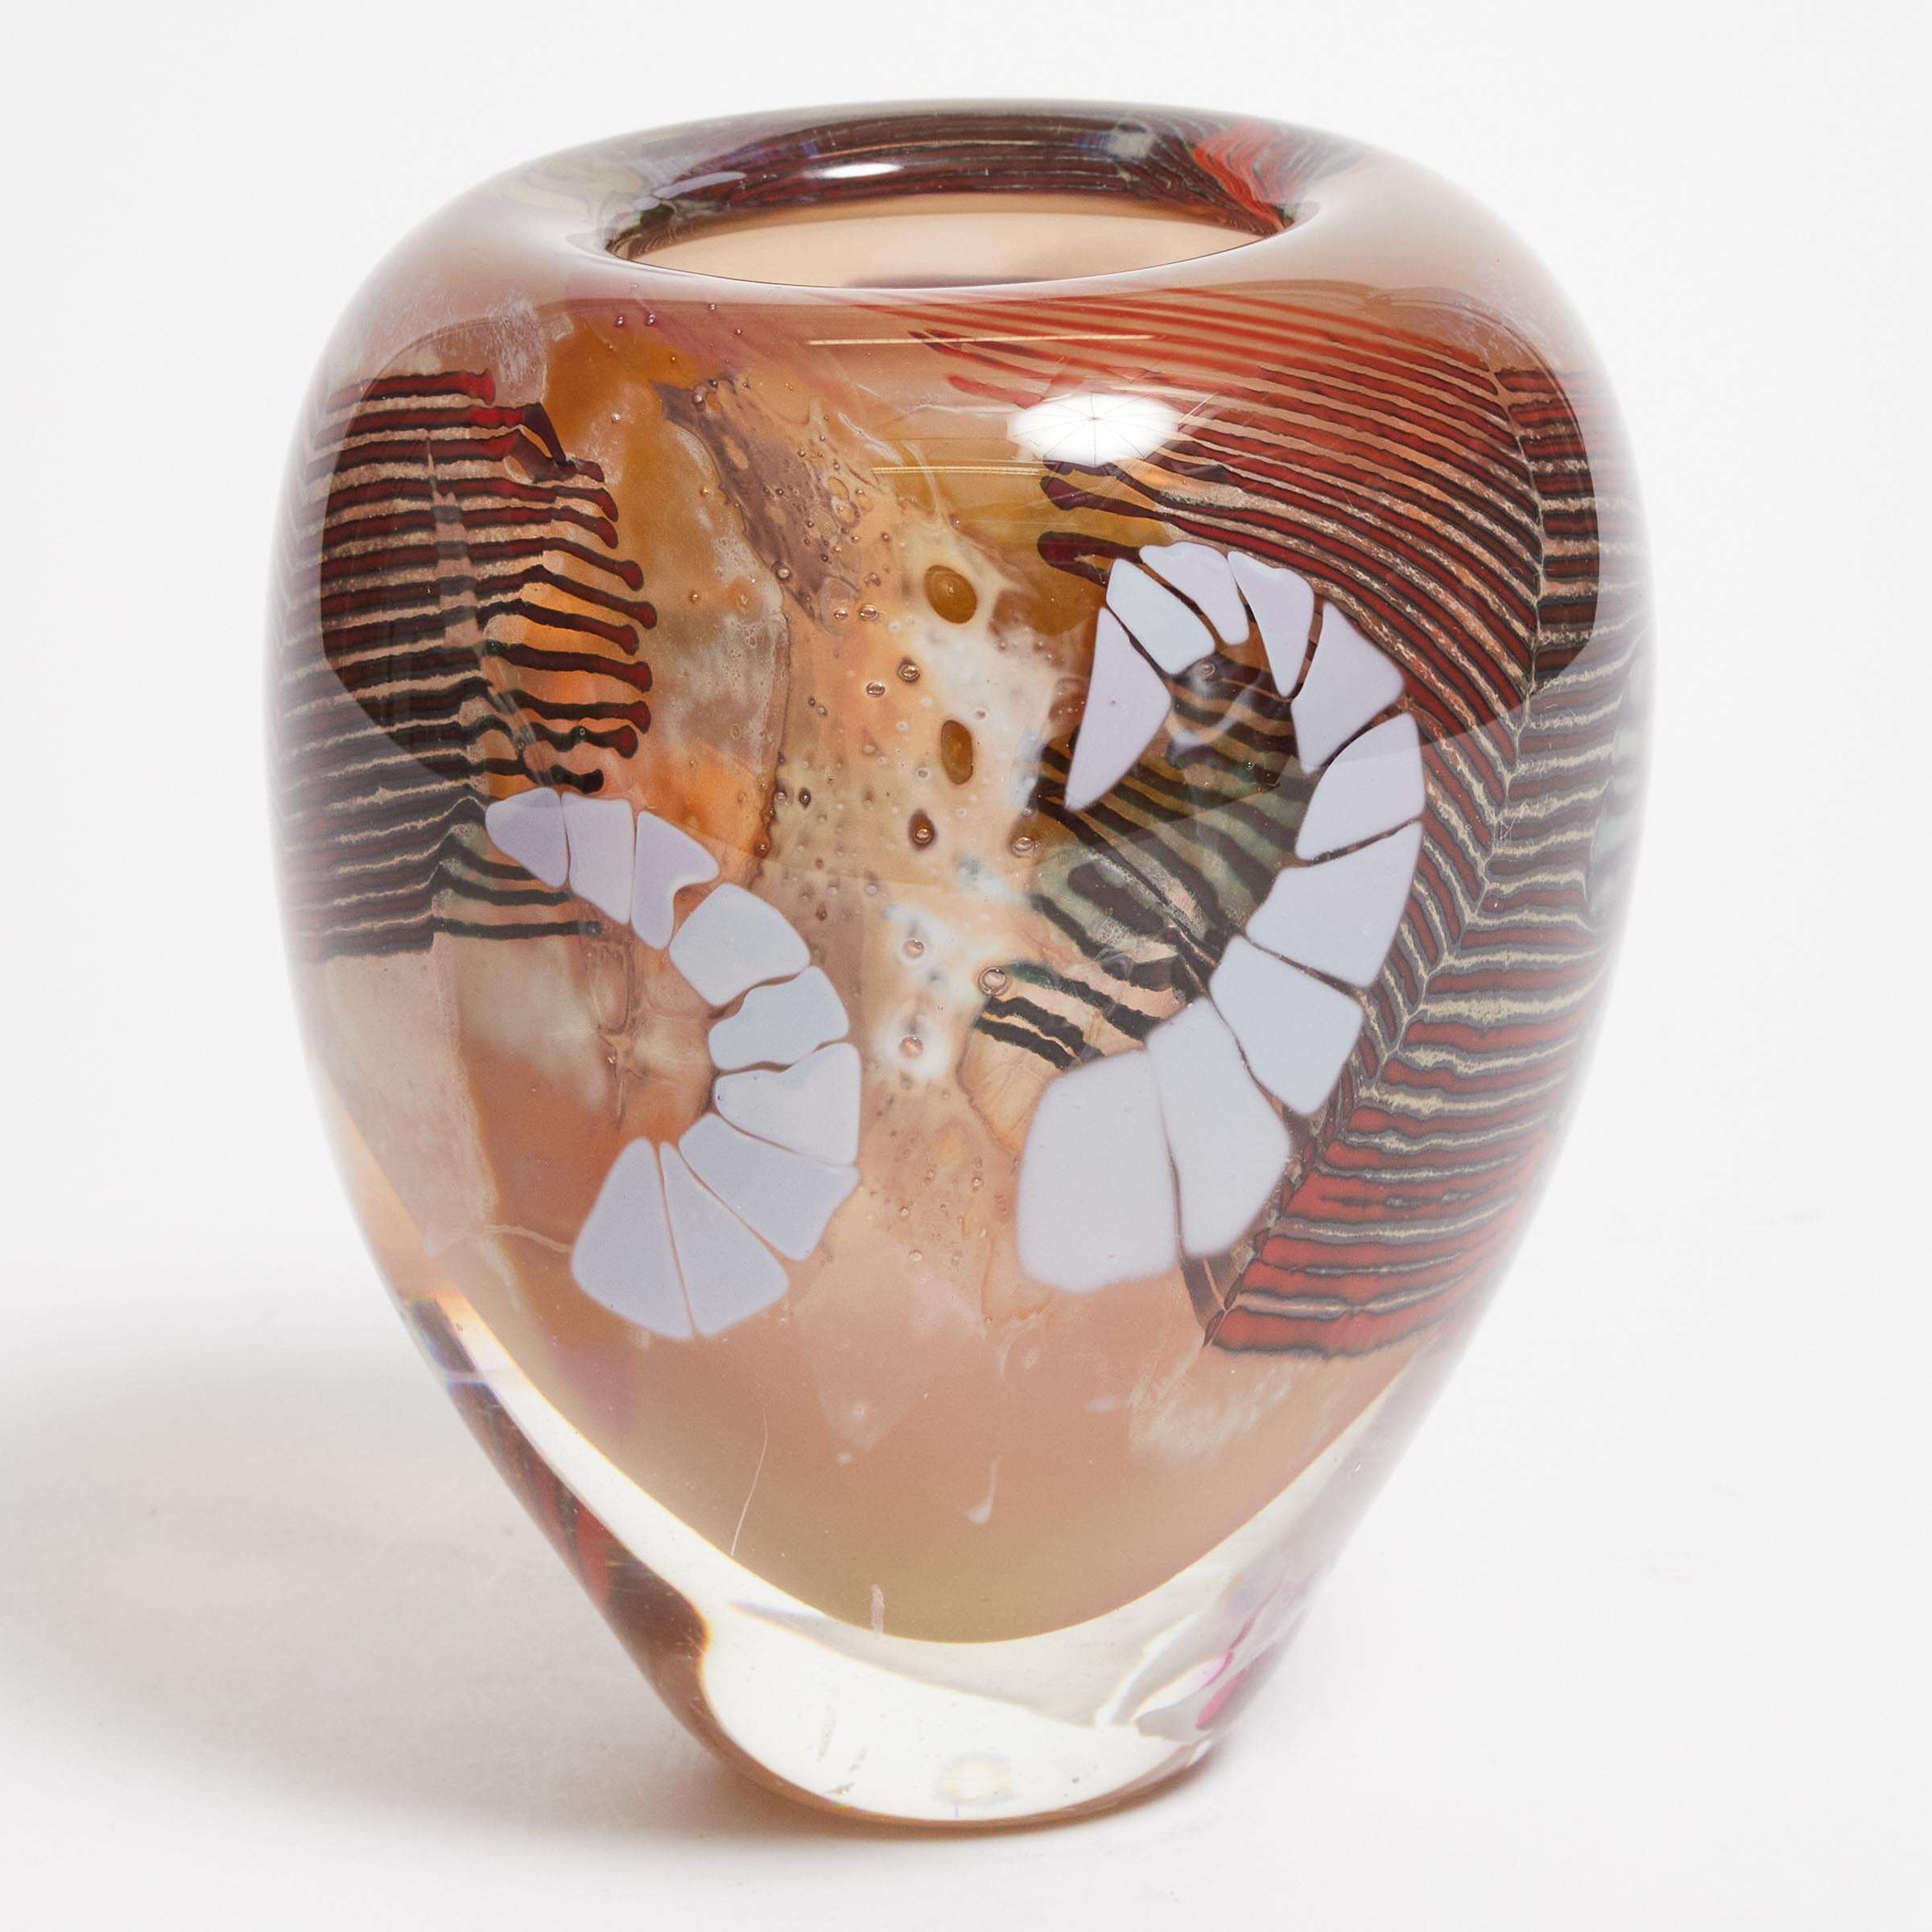 Sally Rogers (American, 20th century), Studio Glass Vase, 1986, height 7 in — 17.7 cm